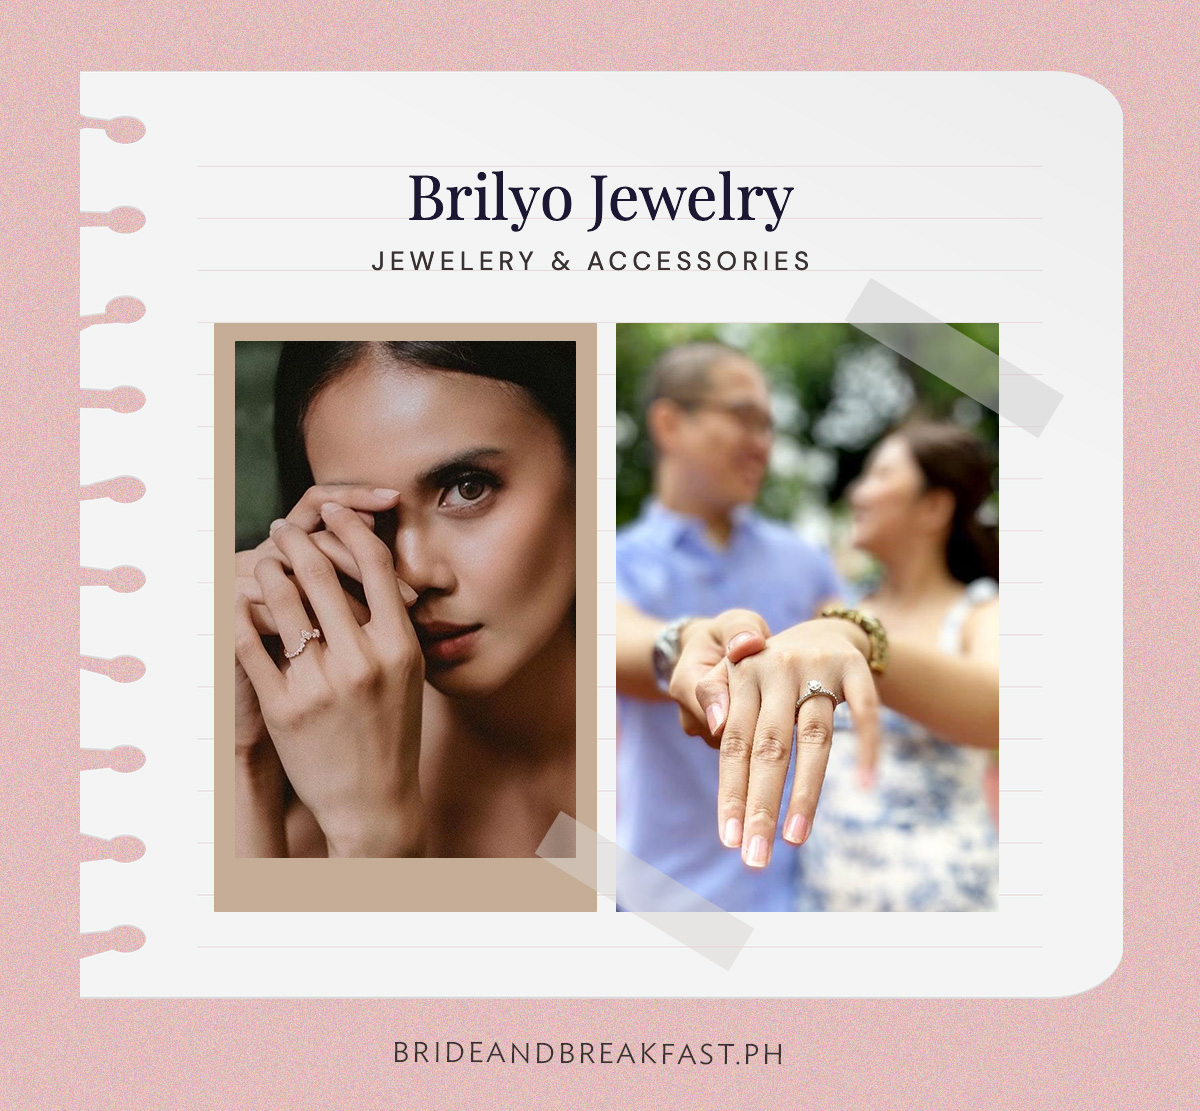 Brilyo Jewelry Jewelery & Accessories